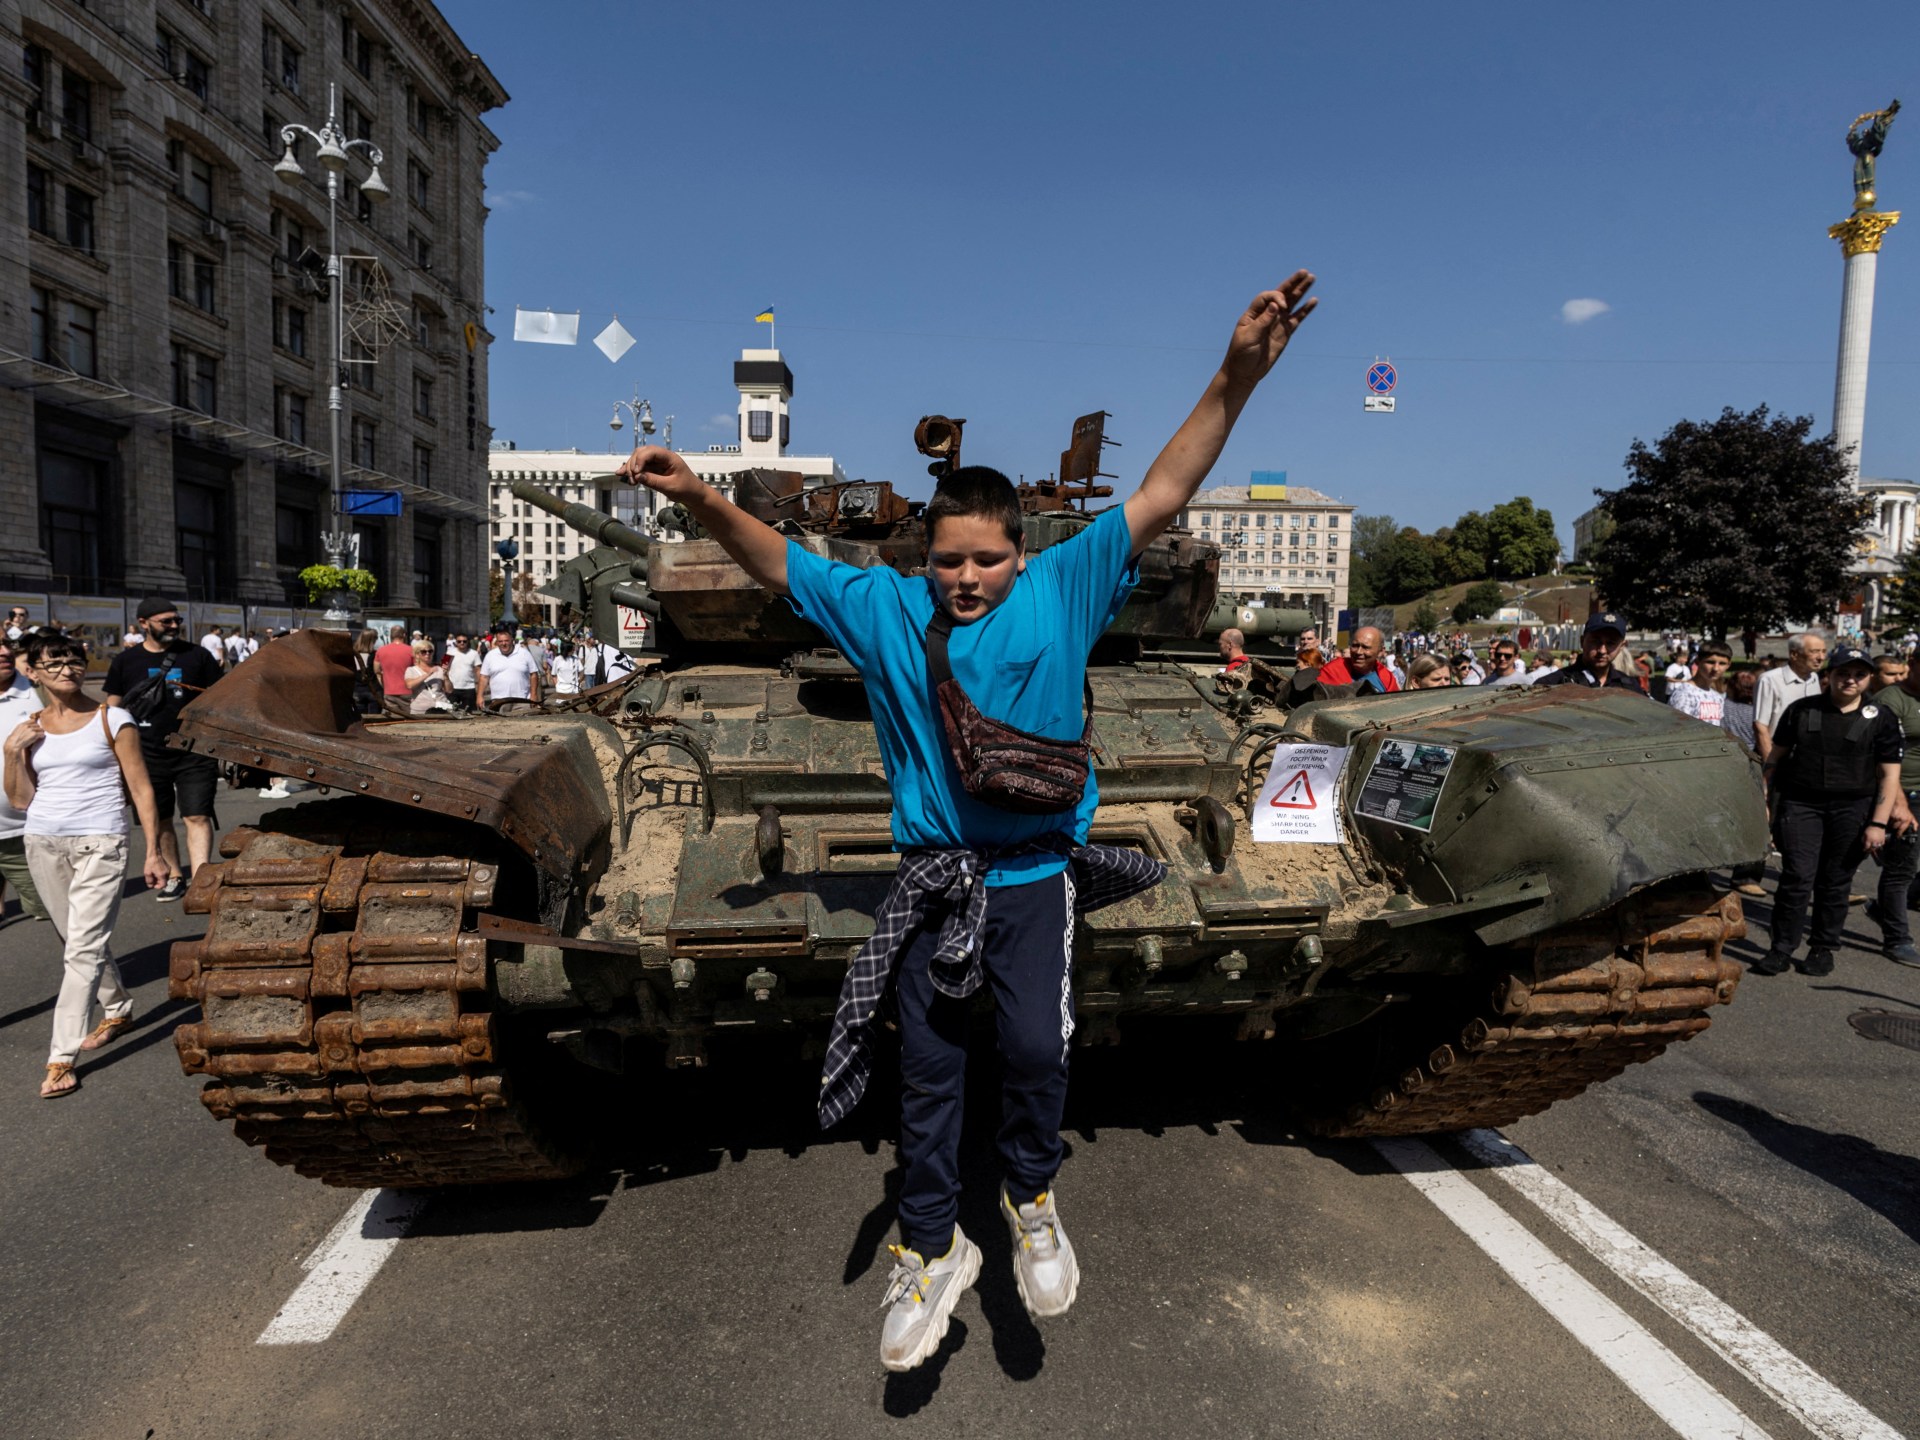 Russia-Ukraine war: Kyiv bans Independence Day celebrations | Russia-Ukraine war News